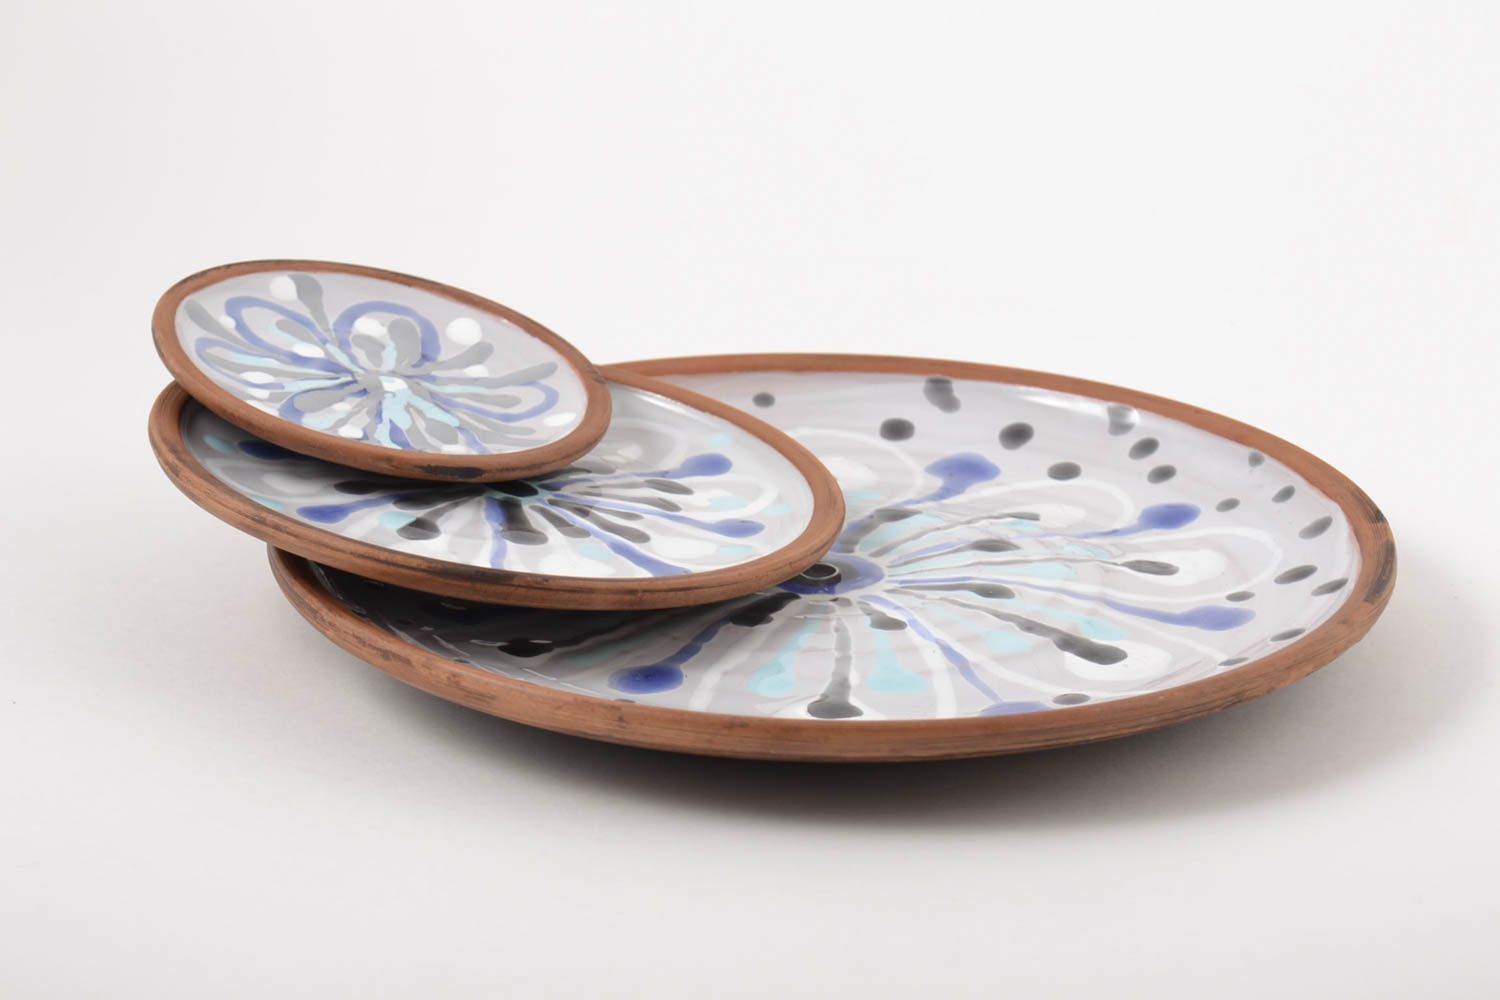 Handmade plates clay plates designer kitchenware handmade pottery decor ideas photo 5